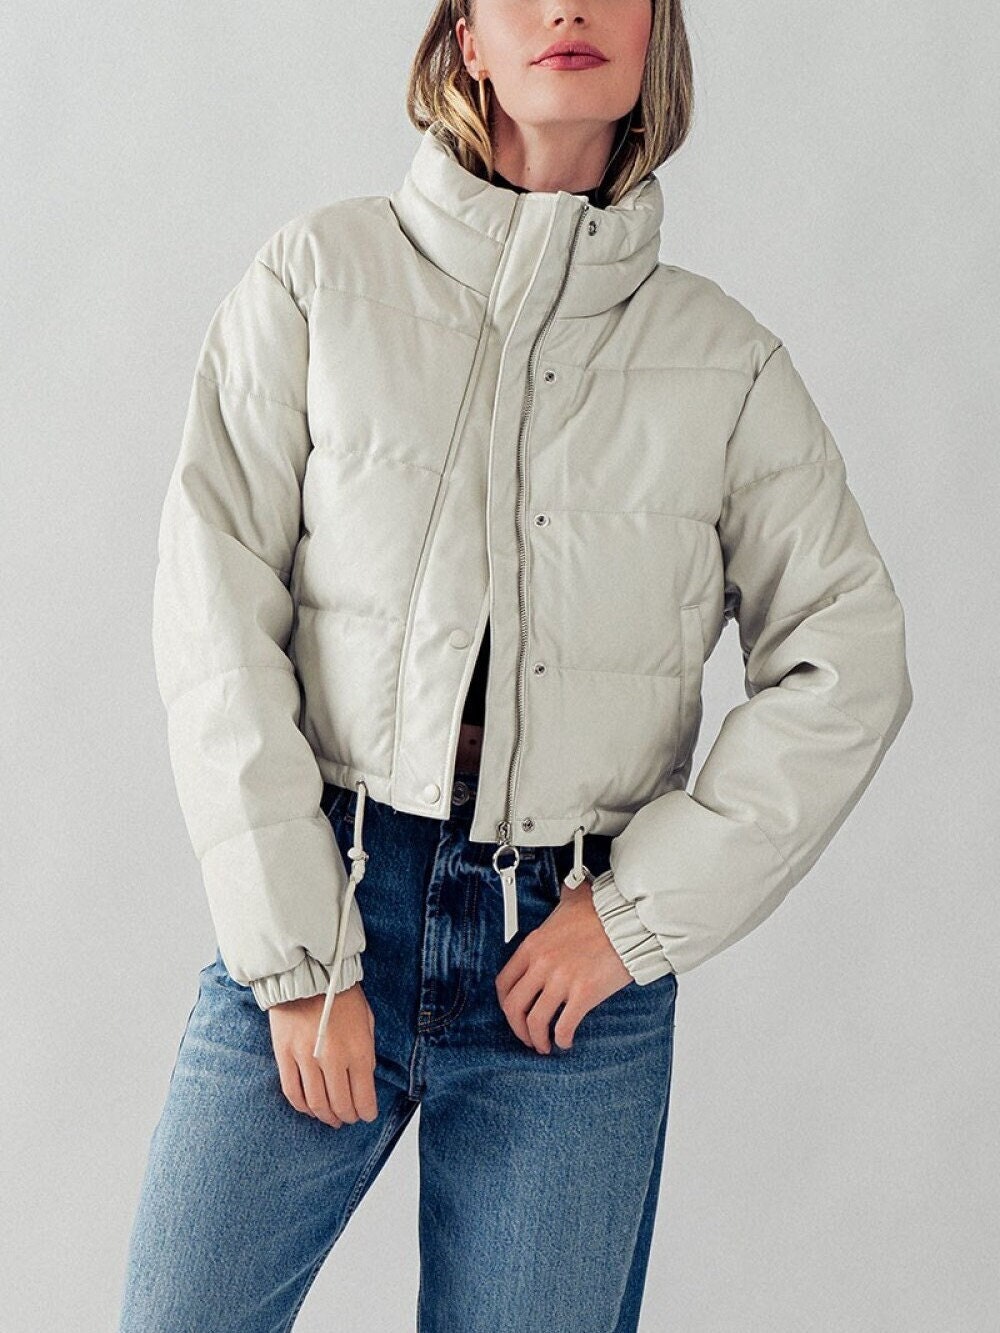 URBAN REPUBLIC Boys' Texture Faux Leather Jacket Patch Pocket Sleeve